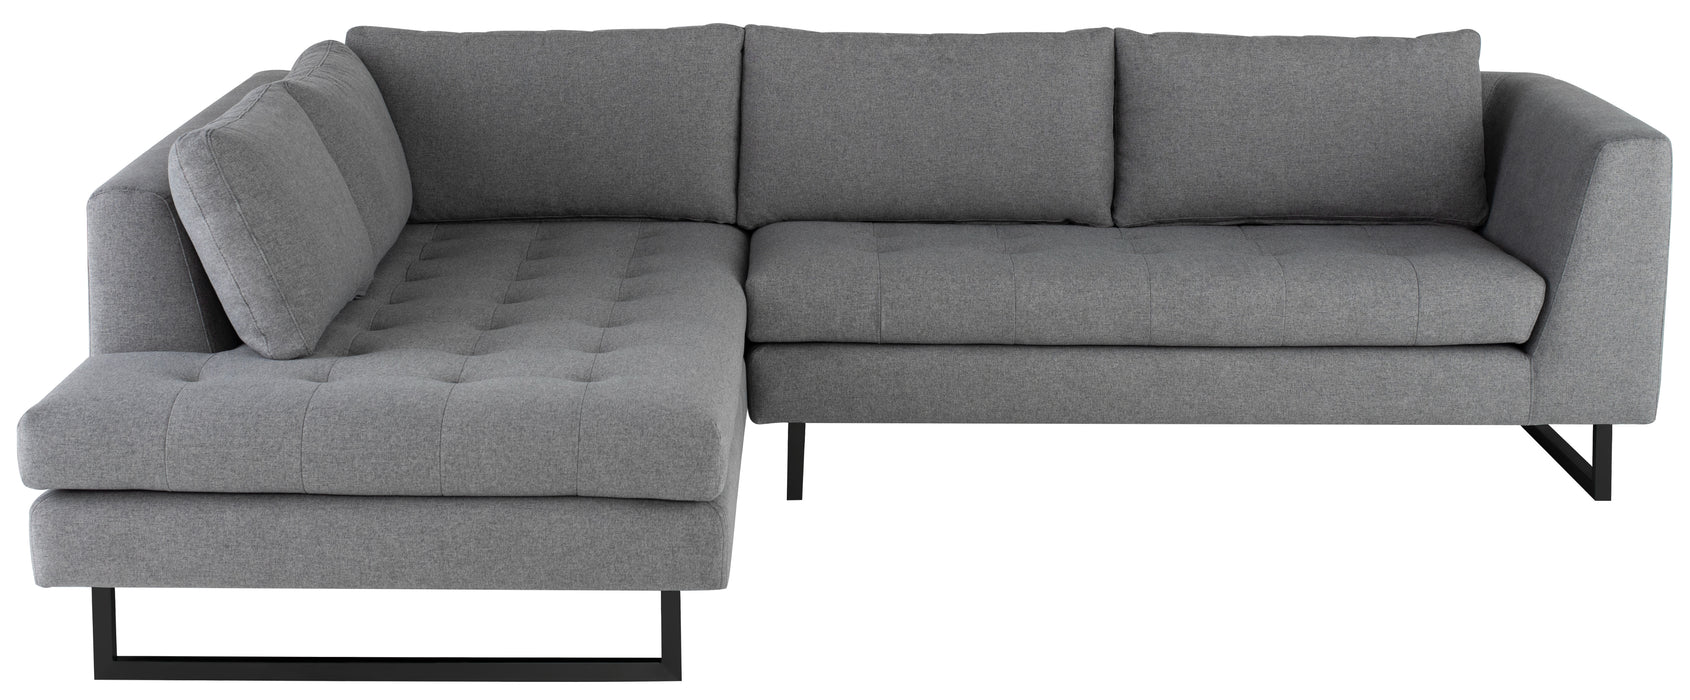 Janis NL Shale Grey Sectional Sofa